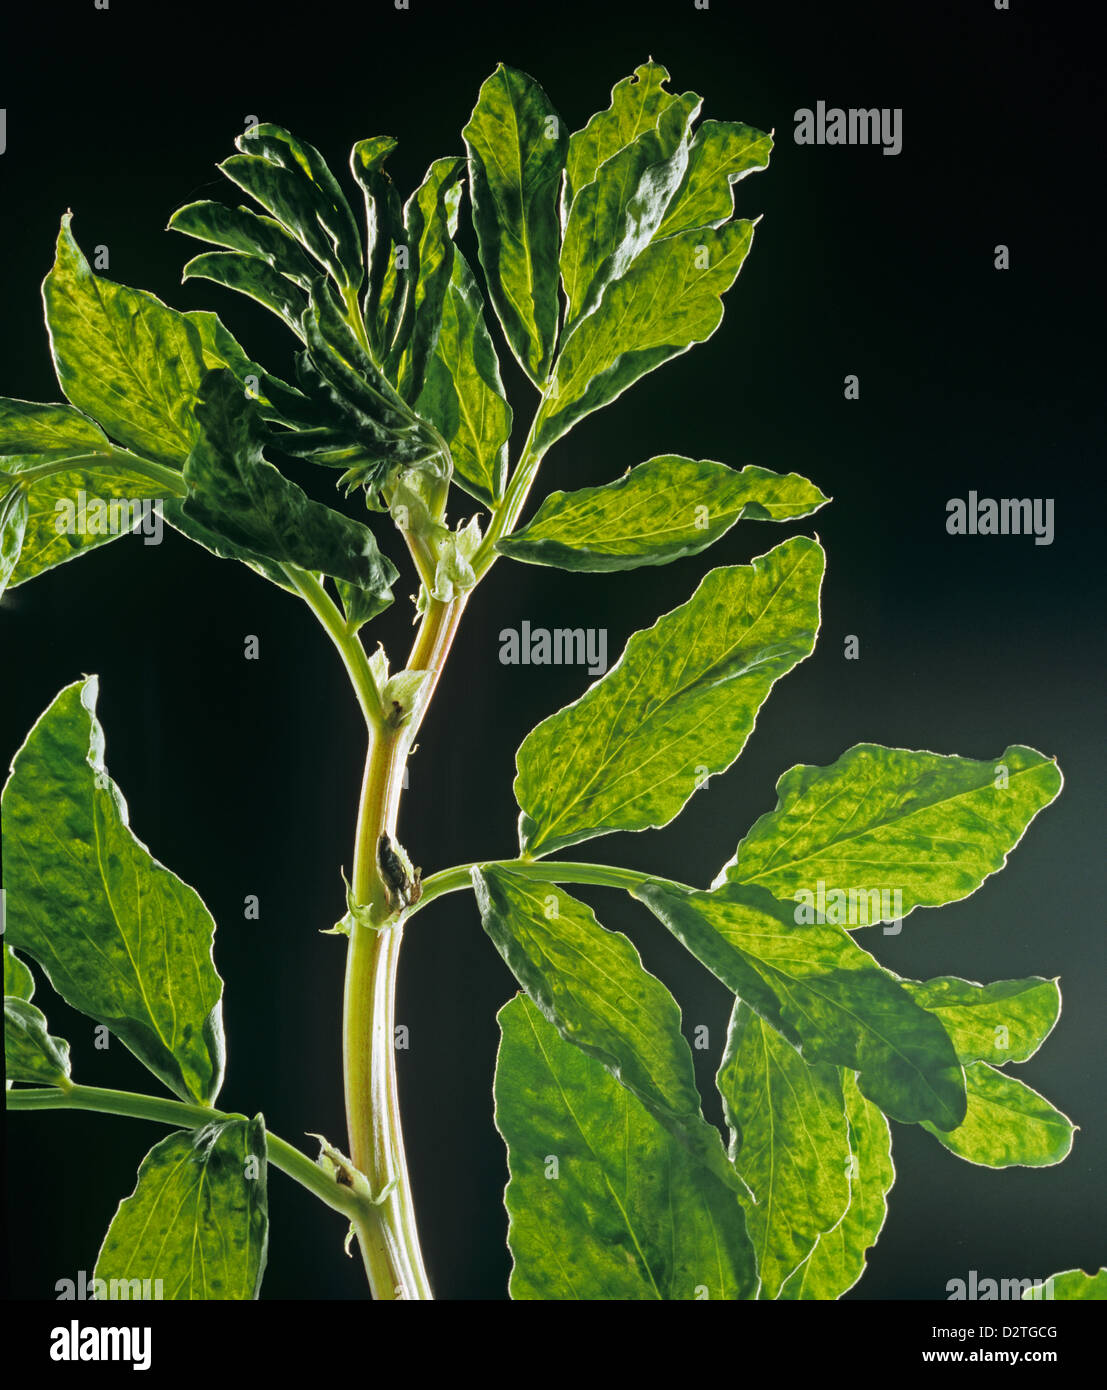 Pea enation mosaic virus, PEMV, mottling in pea leaves shown up by back lighting Stock Photo